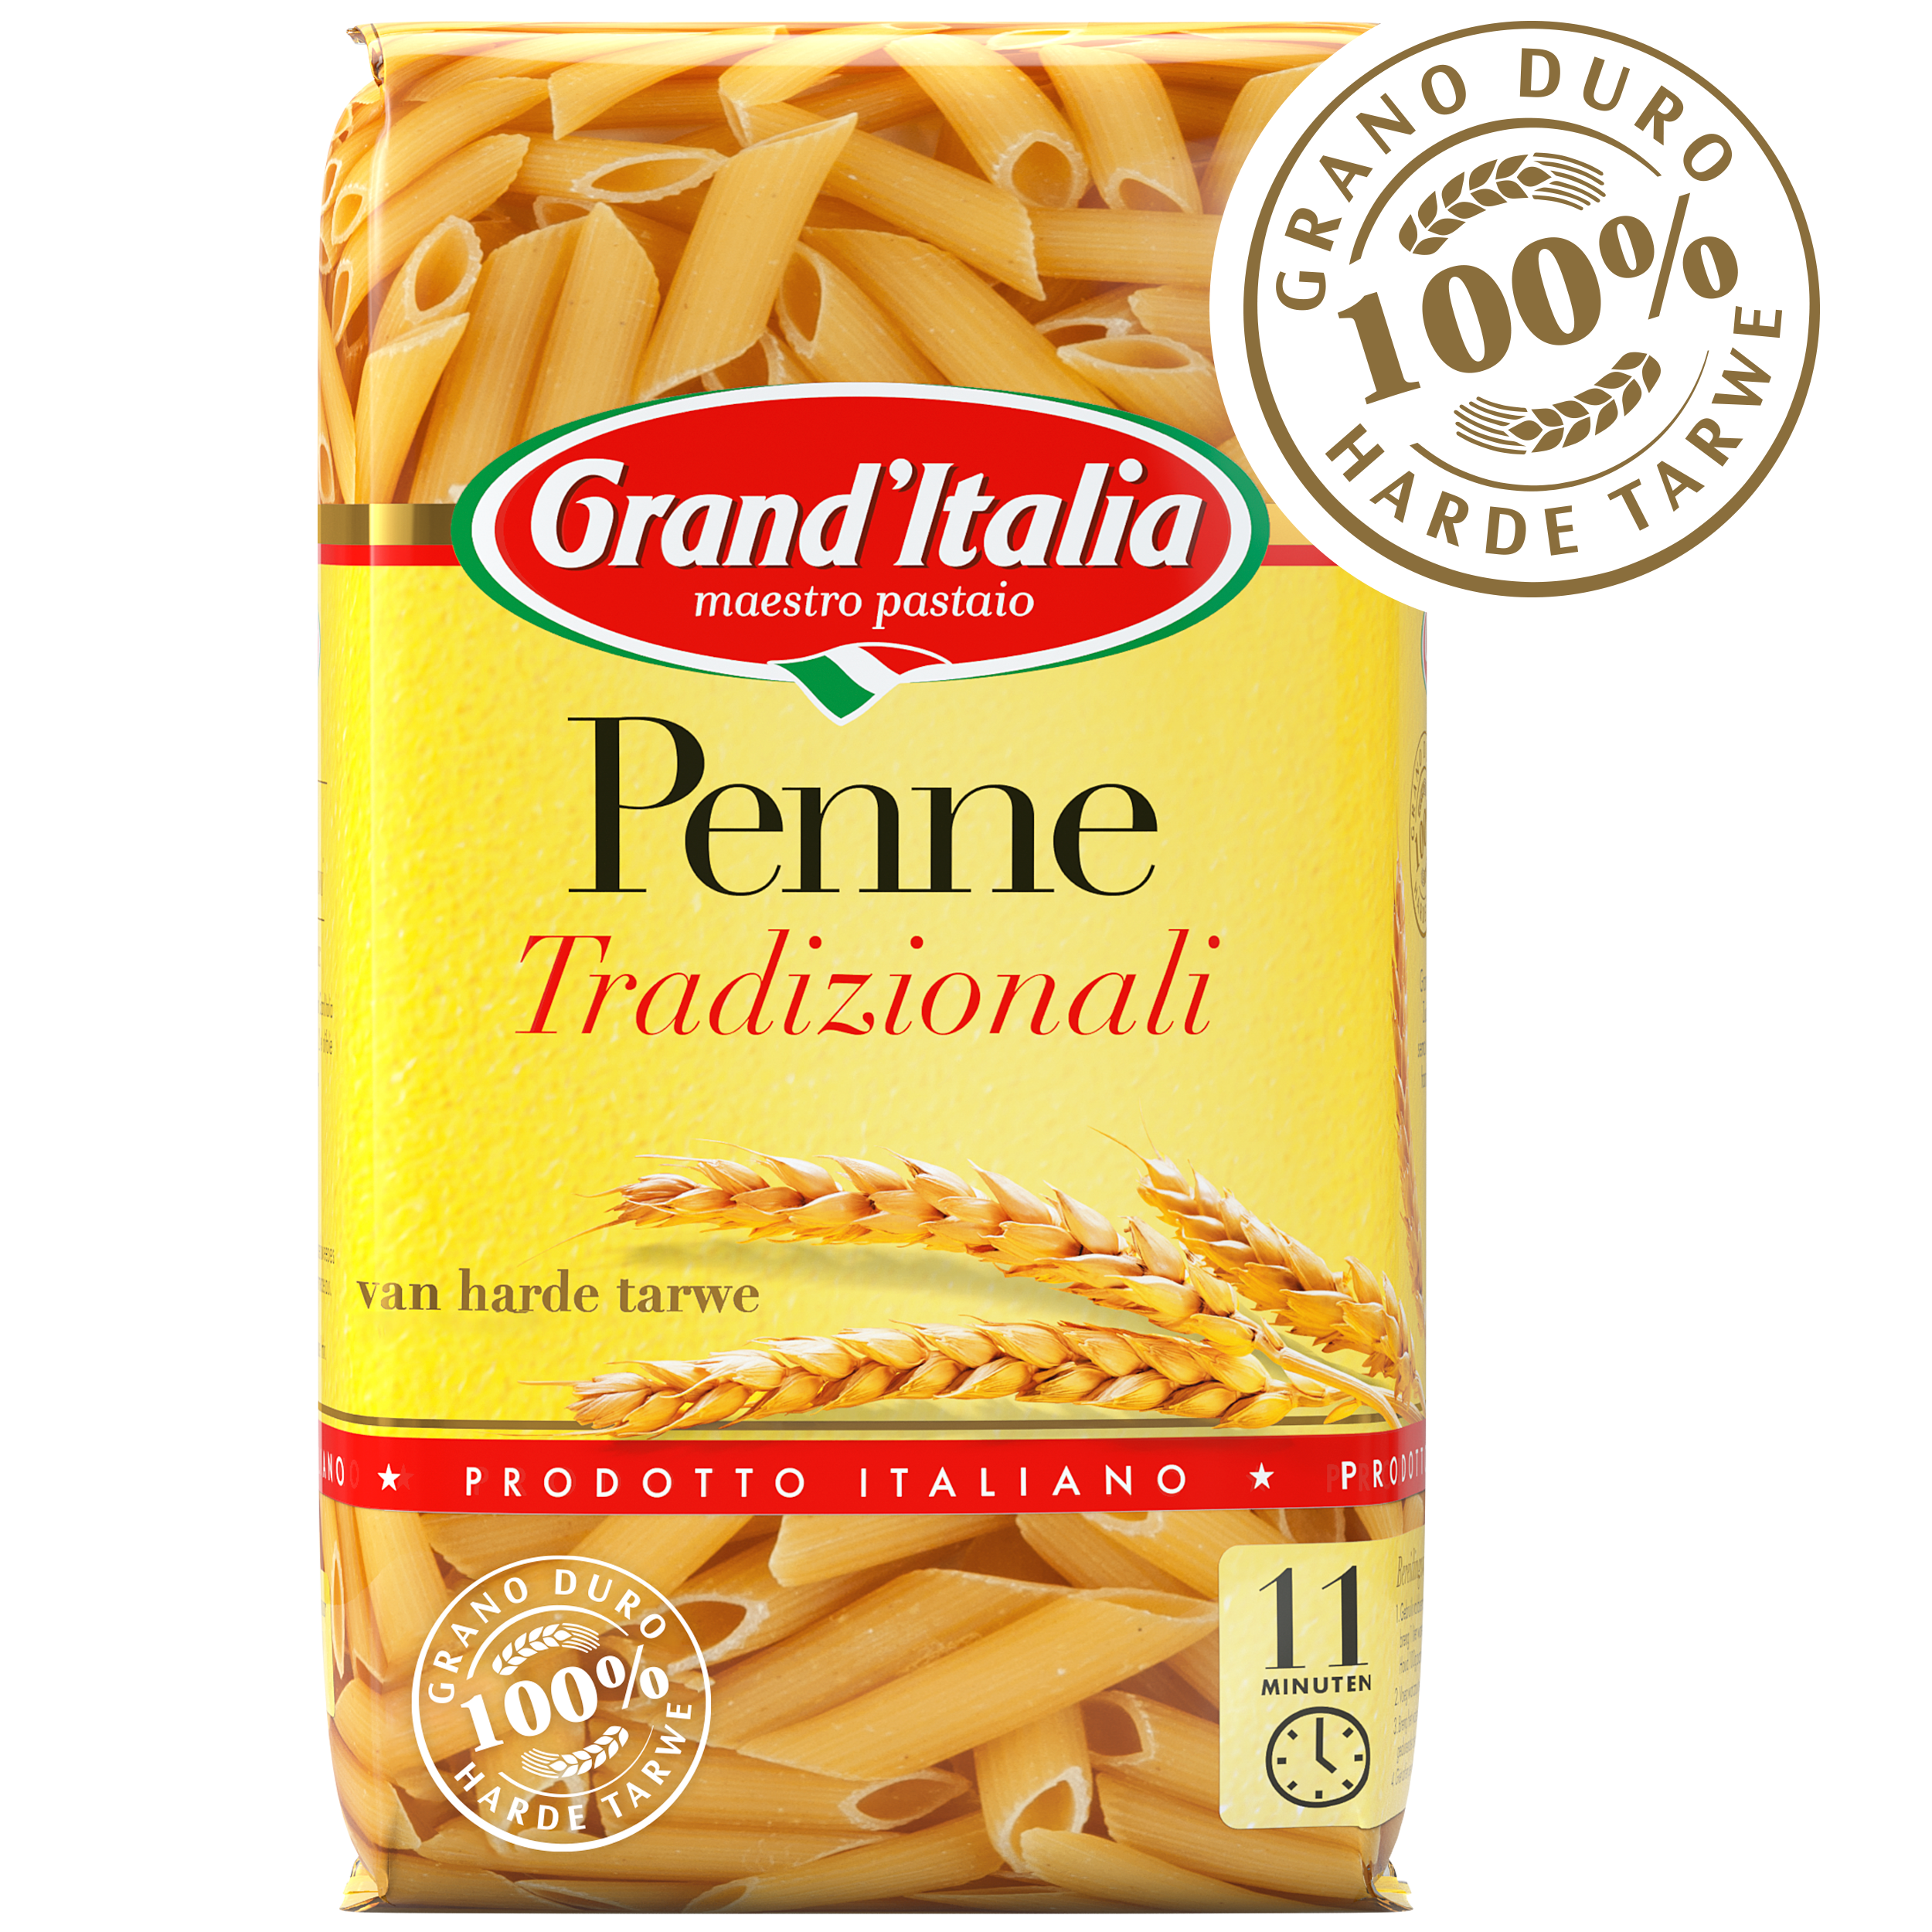 Pasta Penne Tradizionali 500g claim Grand'Italia